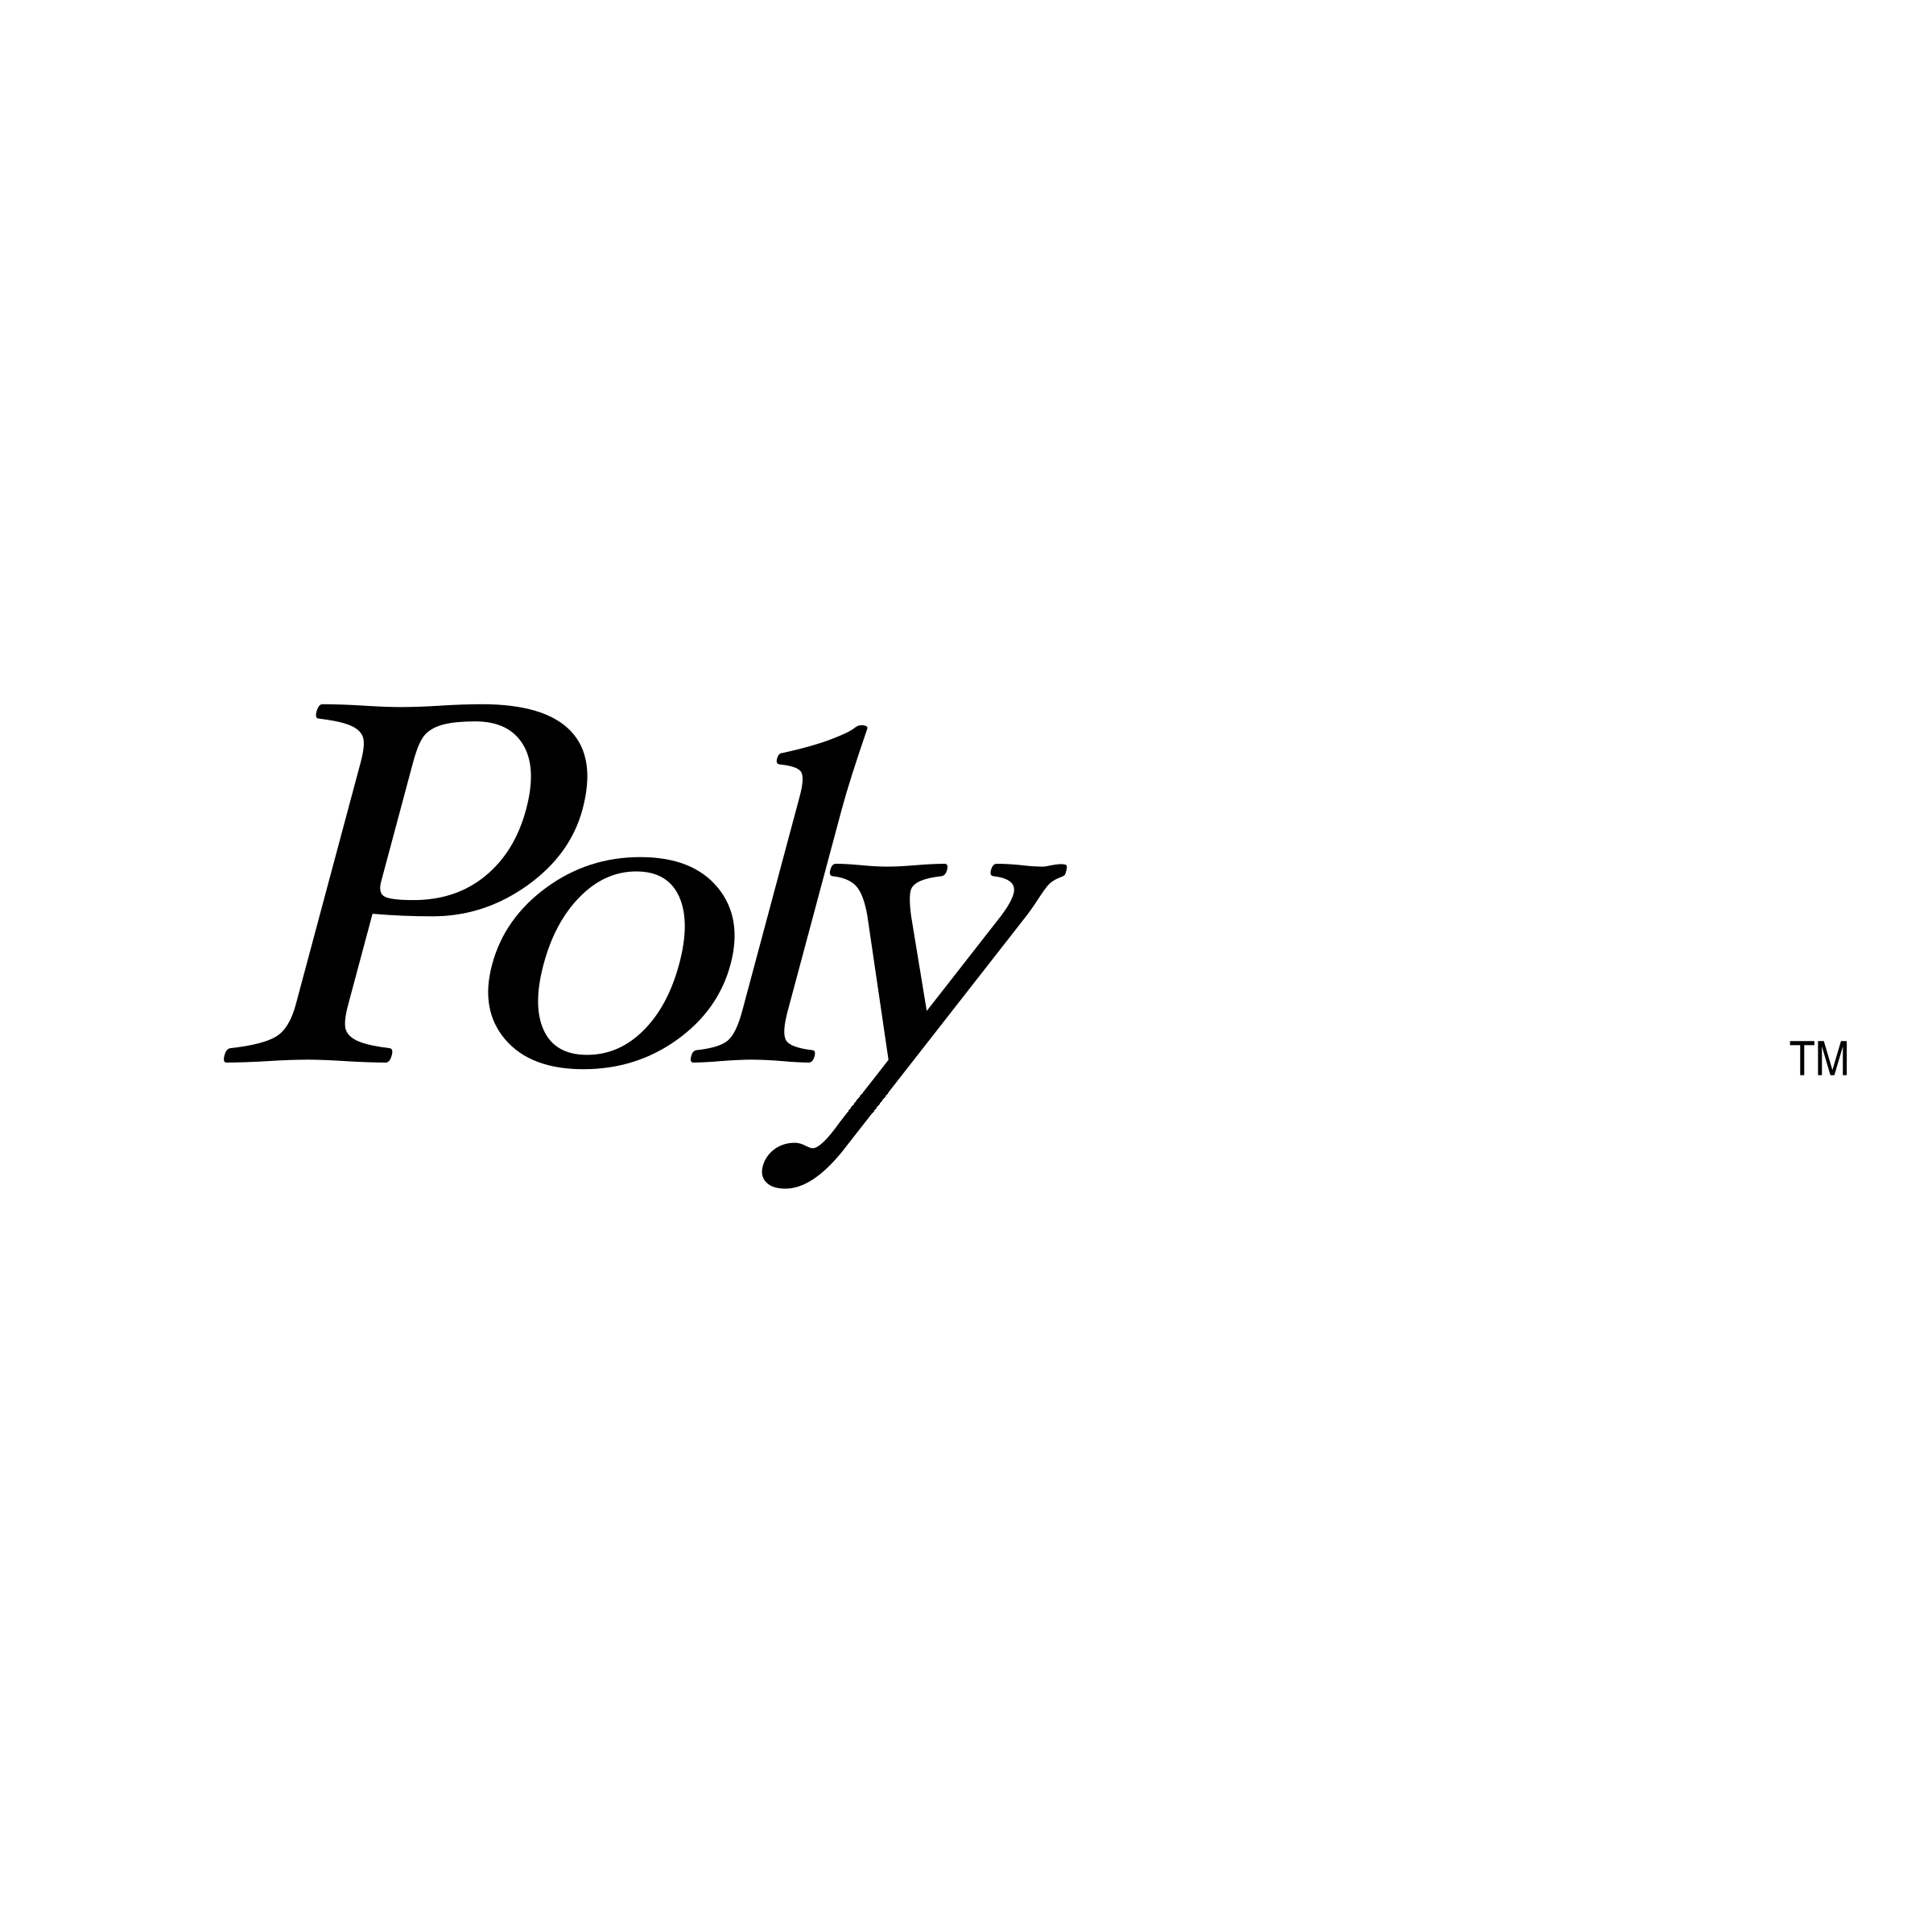 PolyOne Logo - PolyOne Logo PNG Transparent & SVG Vector - Freebie Supply